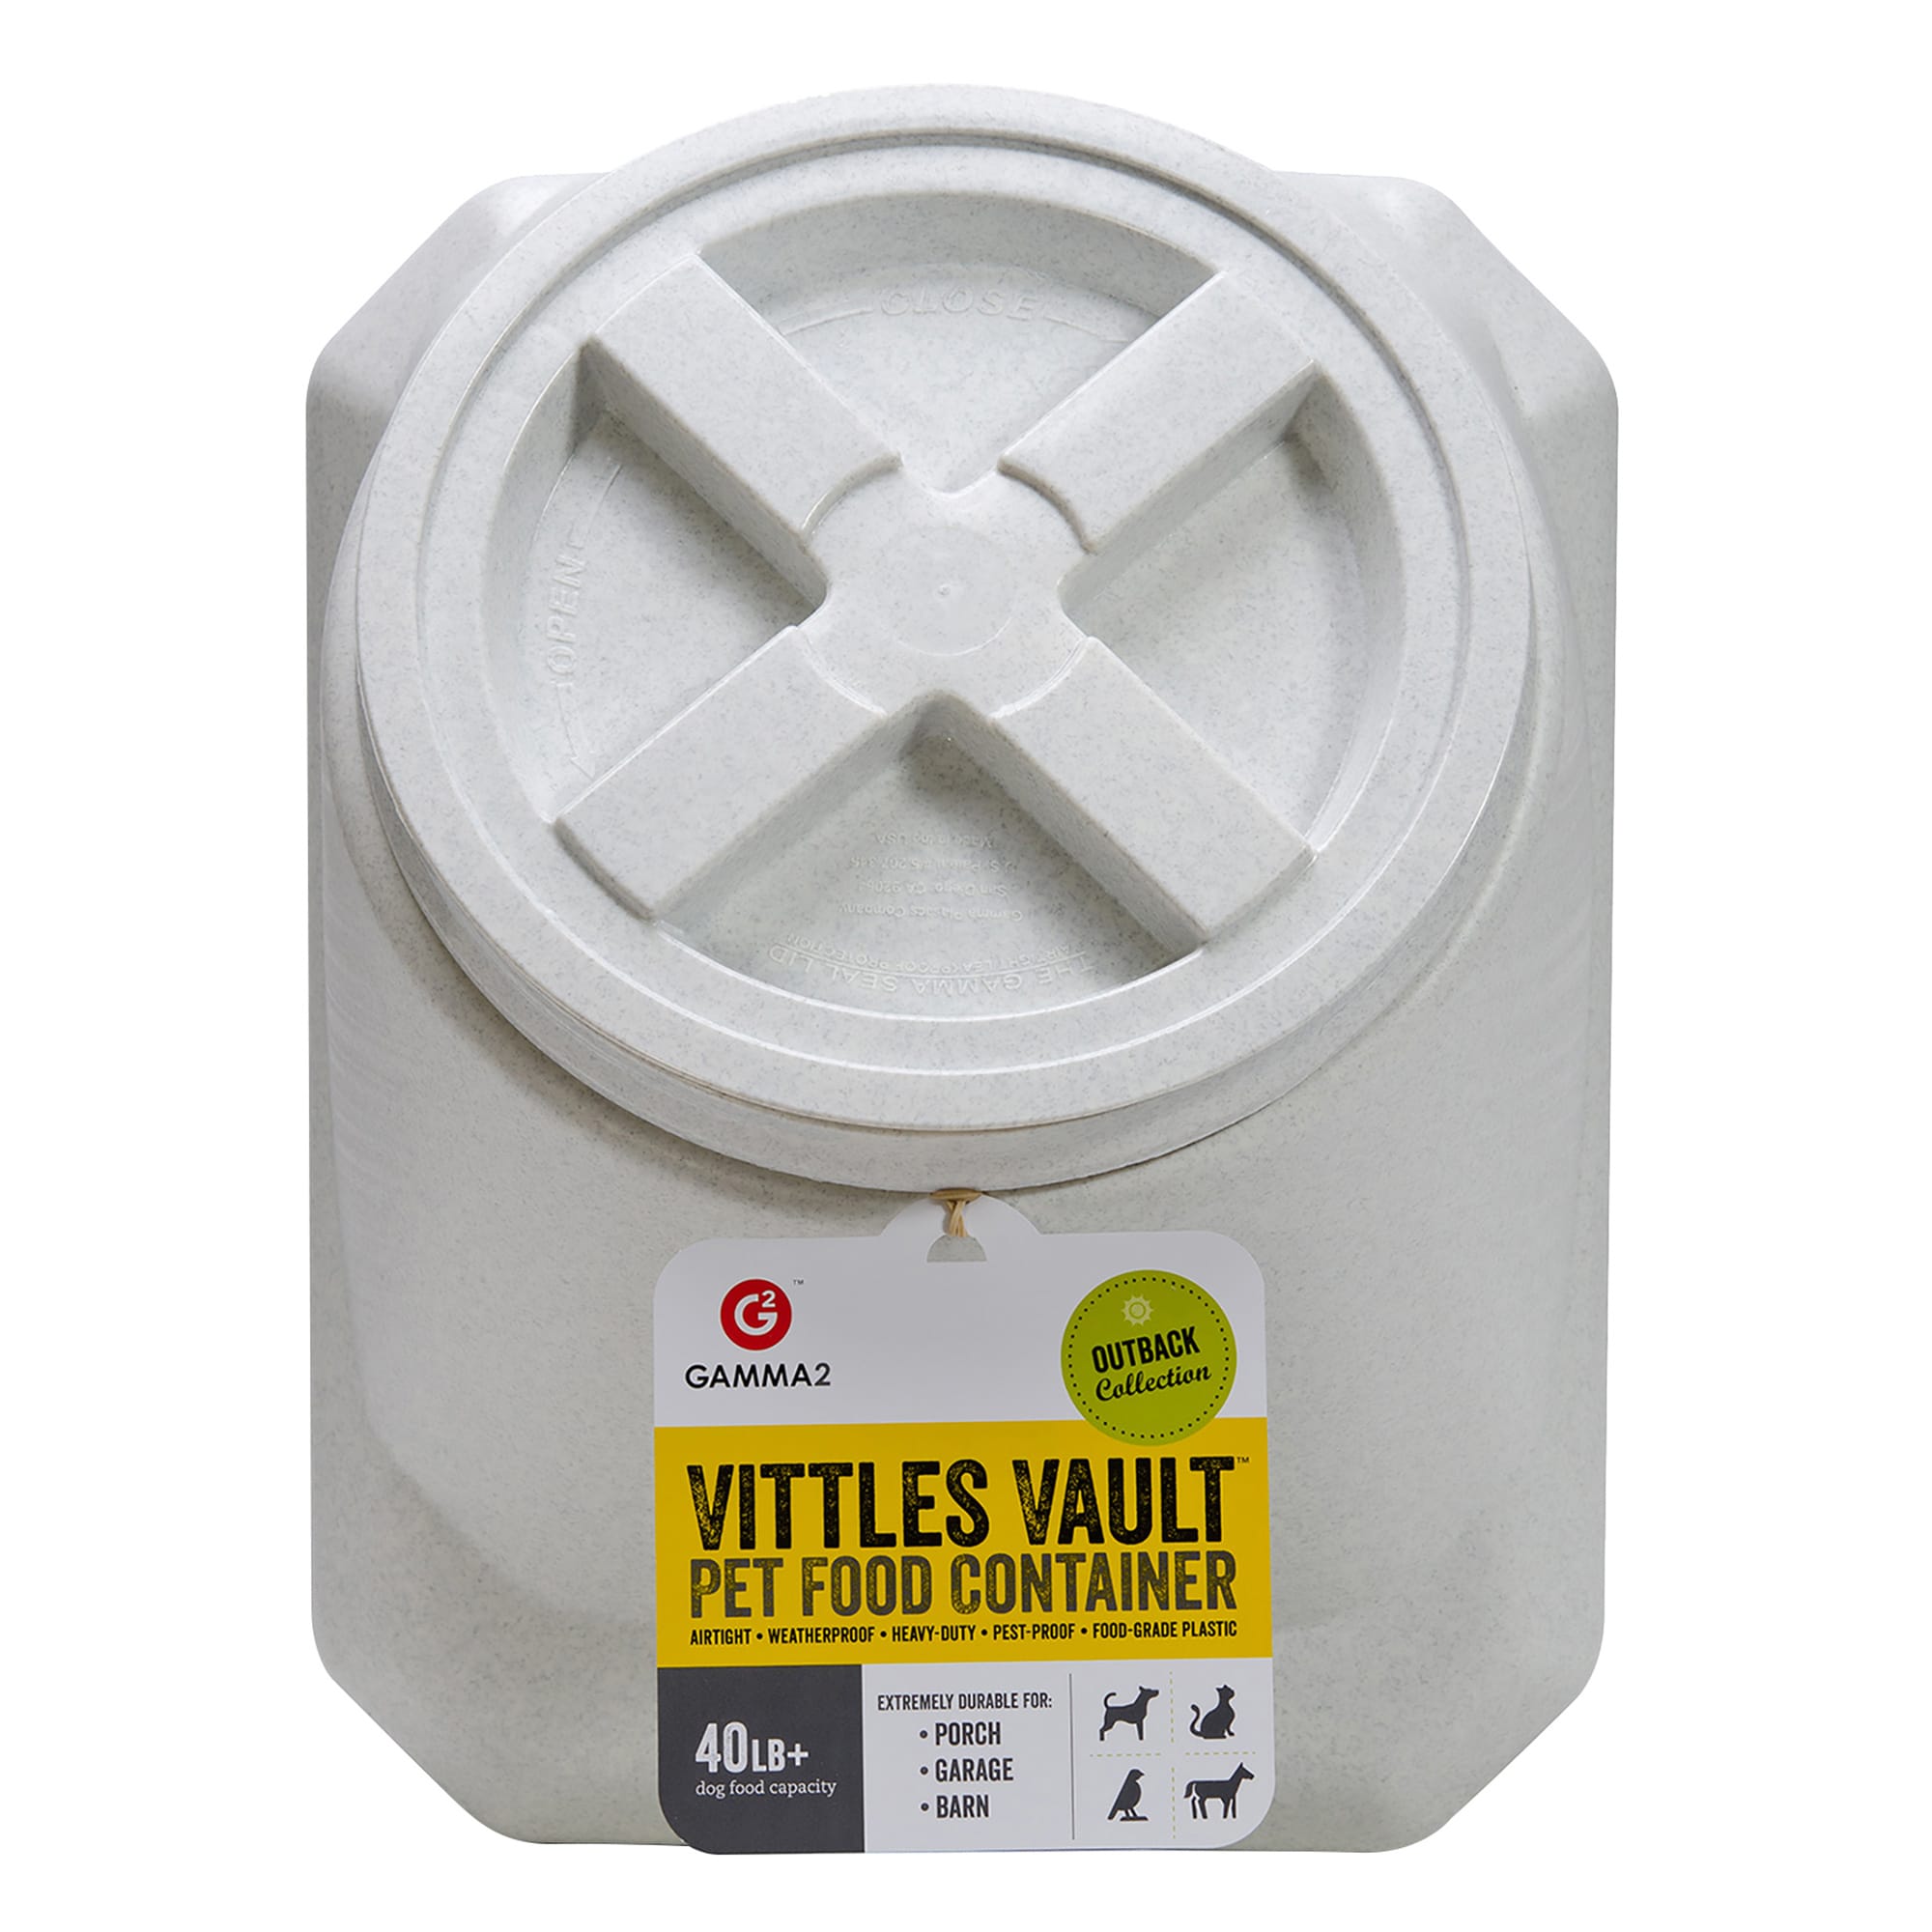 the vittles vault